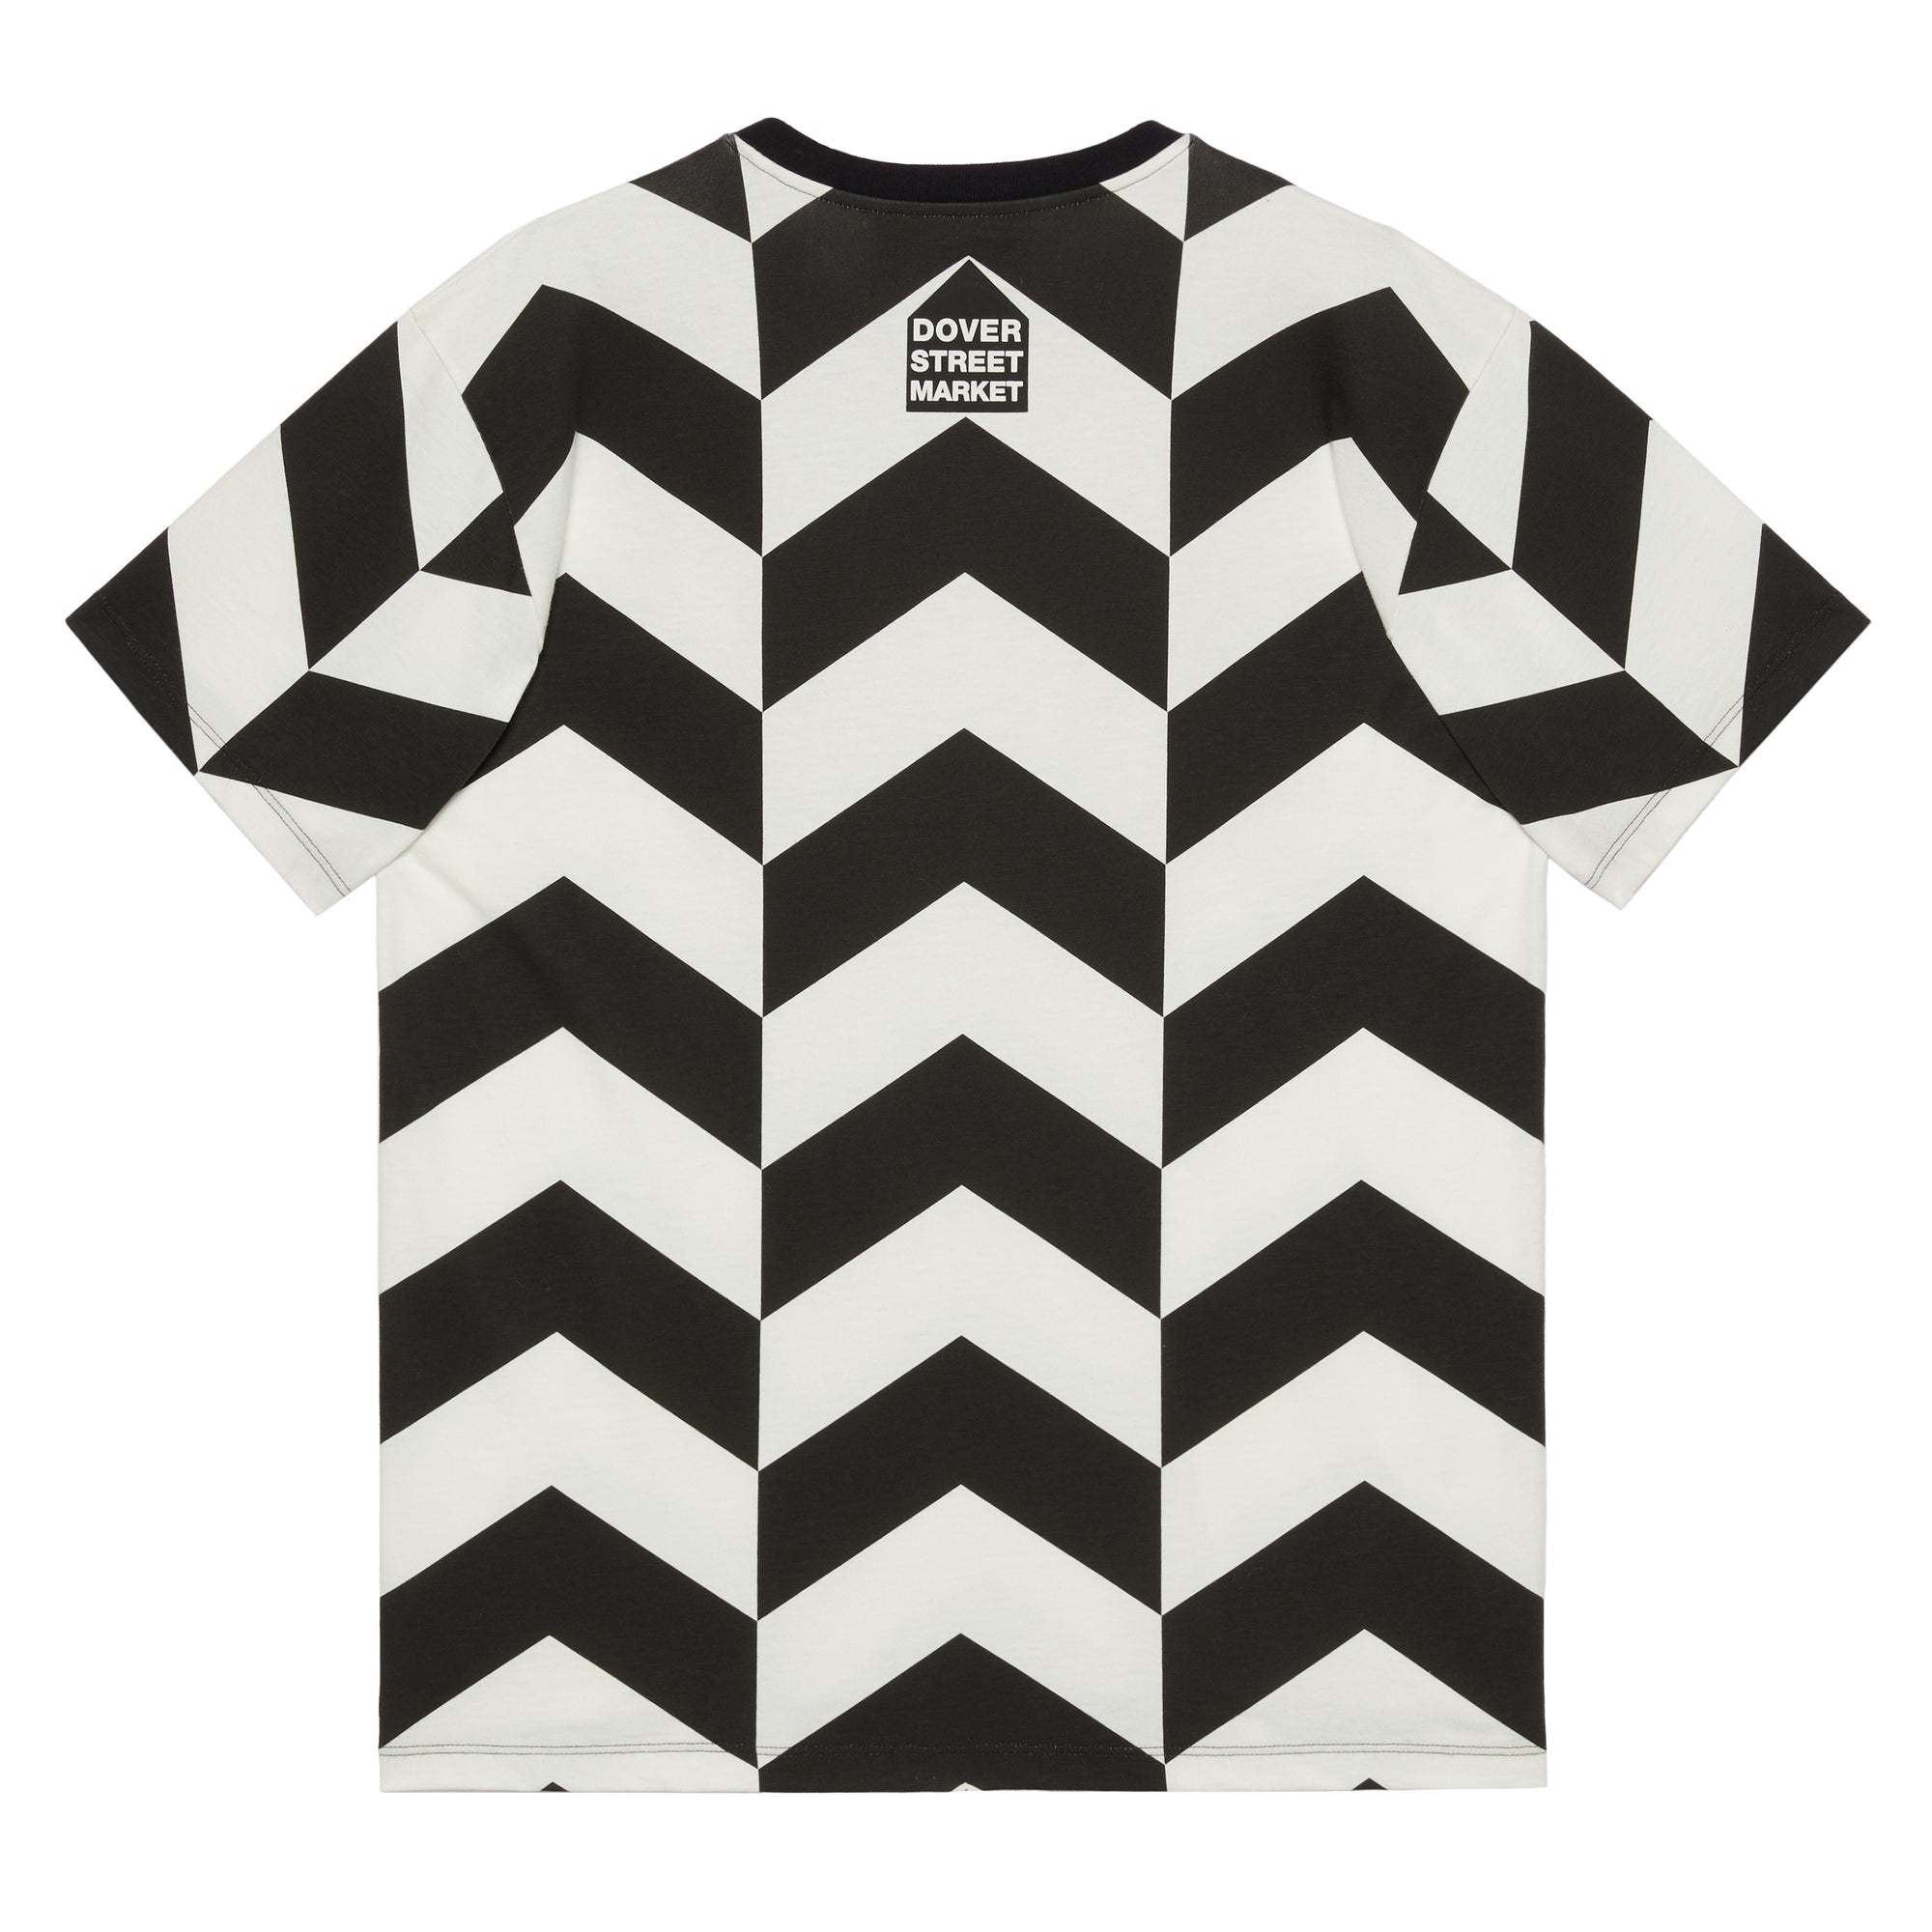 Gucci - Men’s DSM Exclusive Chevron Printed T-Shirt - (Black/White) view 2